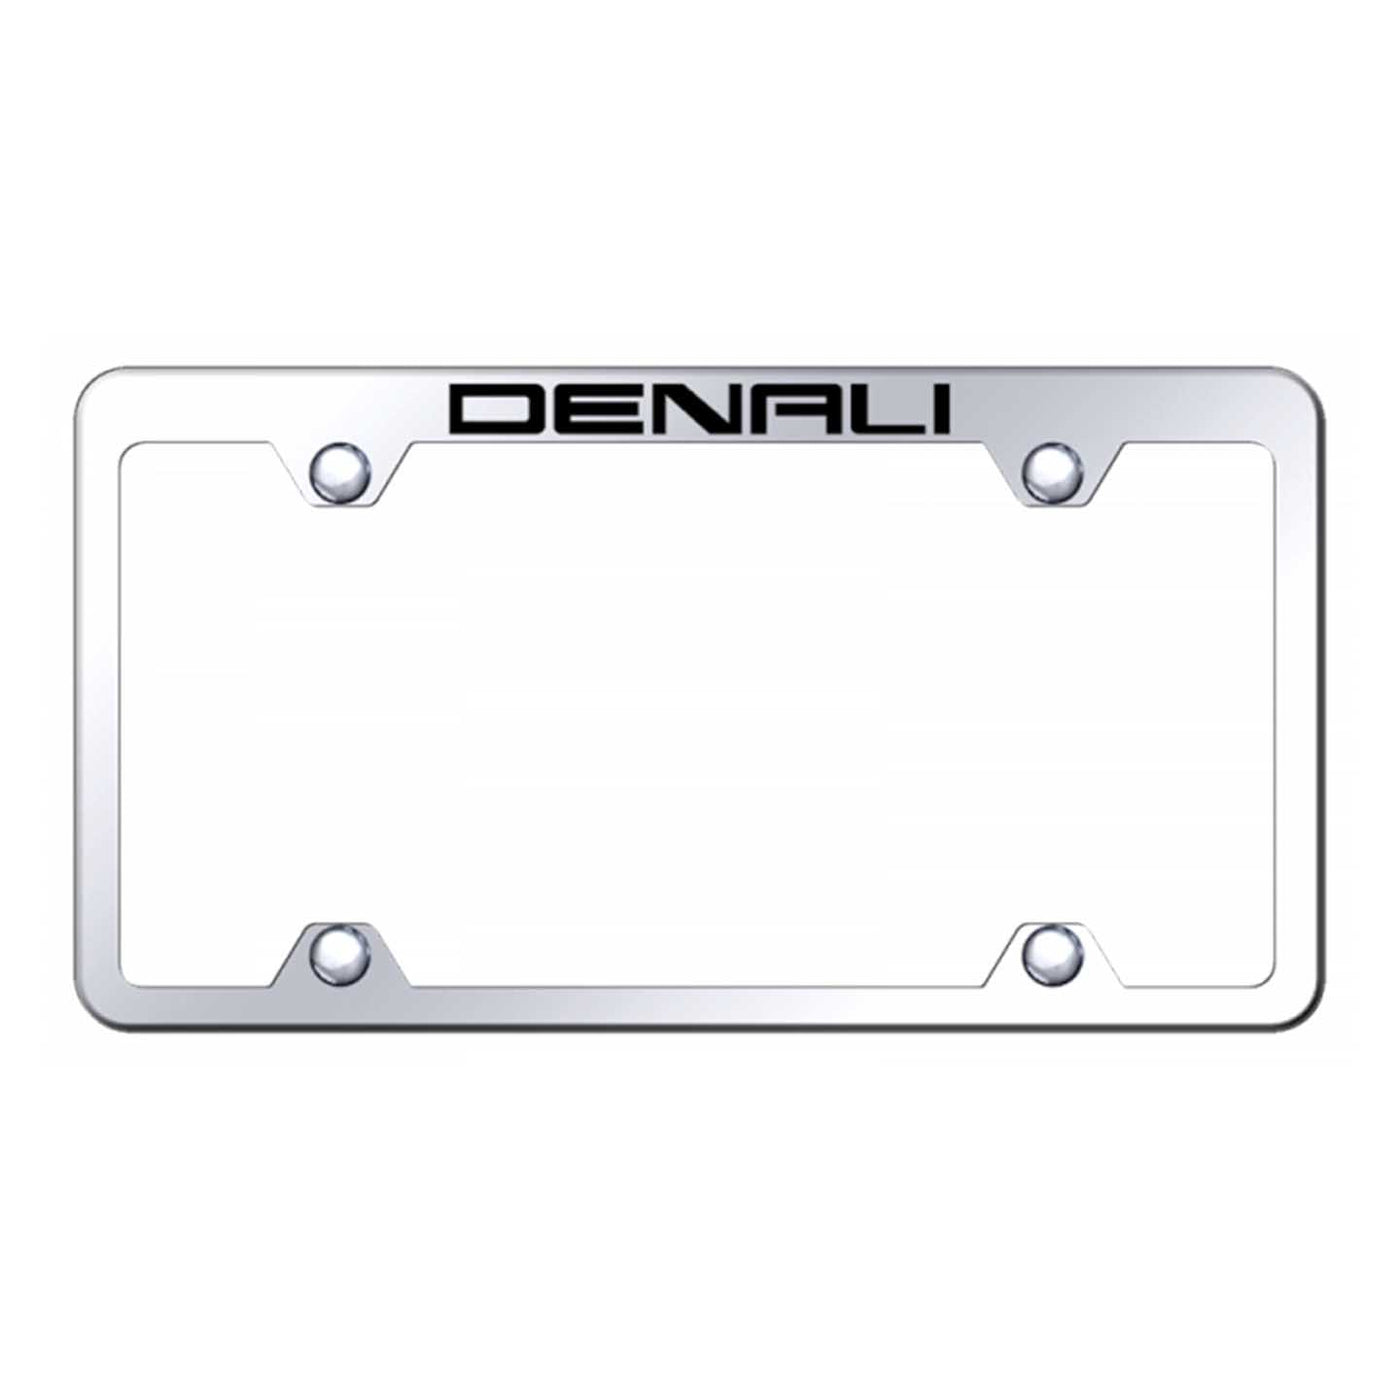 Denali Steel Truck Wide Body Frame - Laser Etched Mirrored